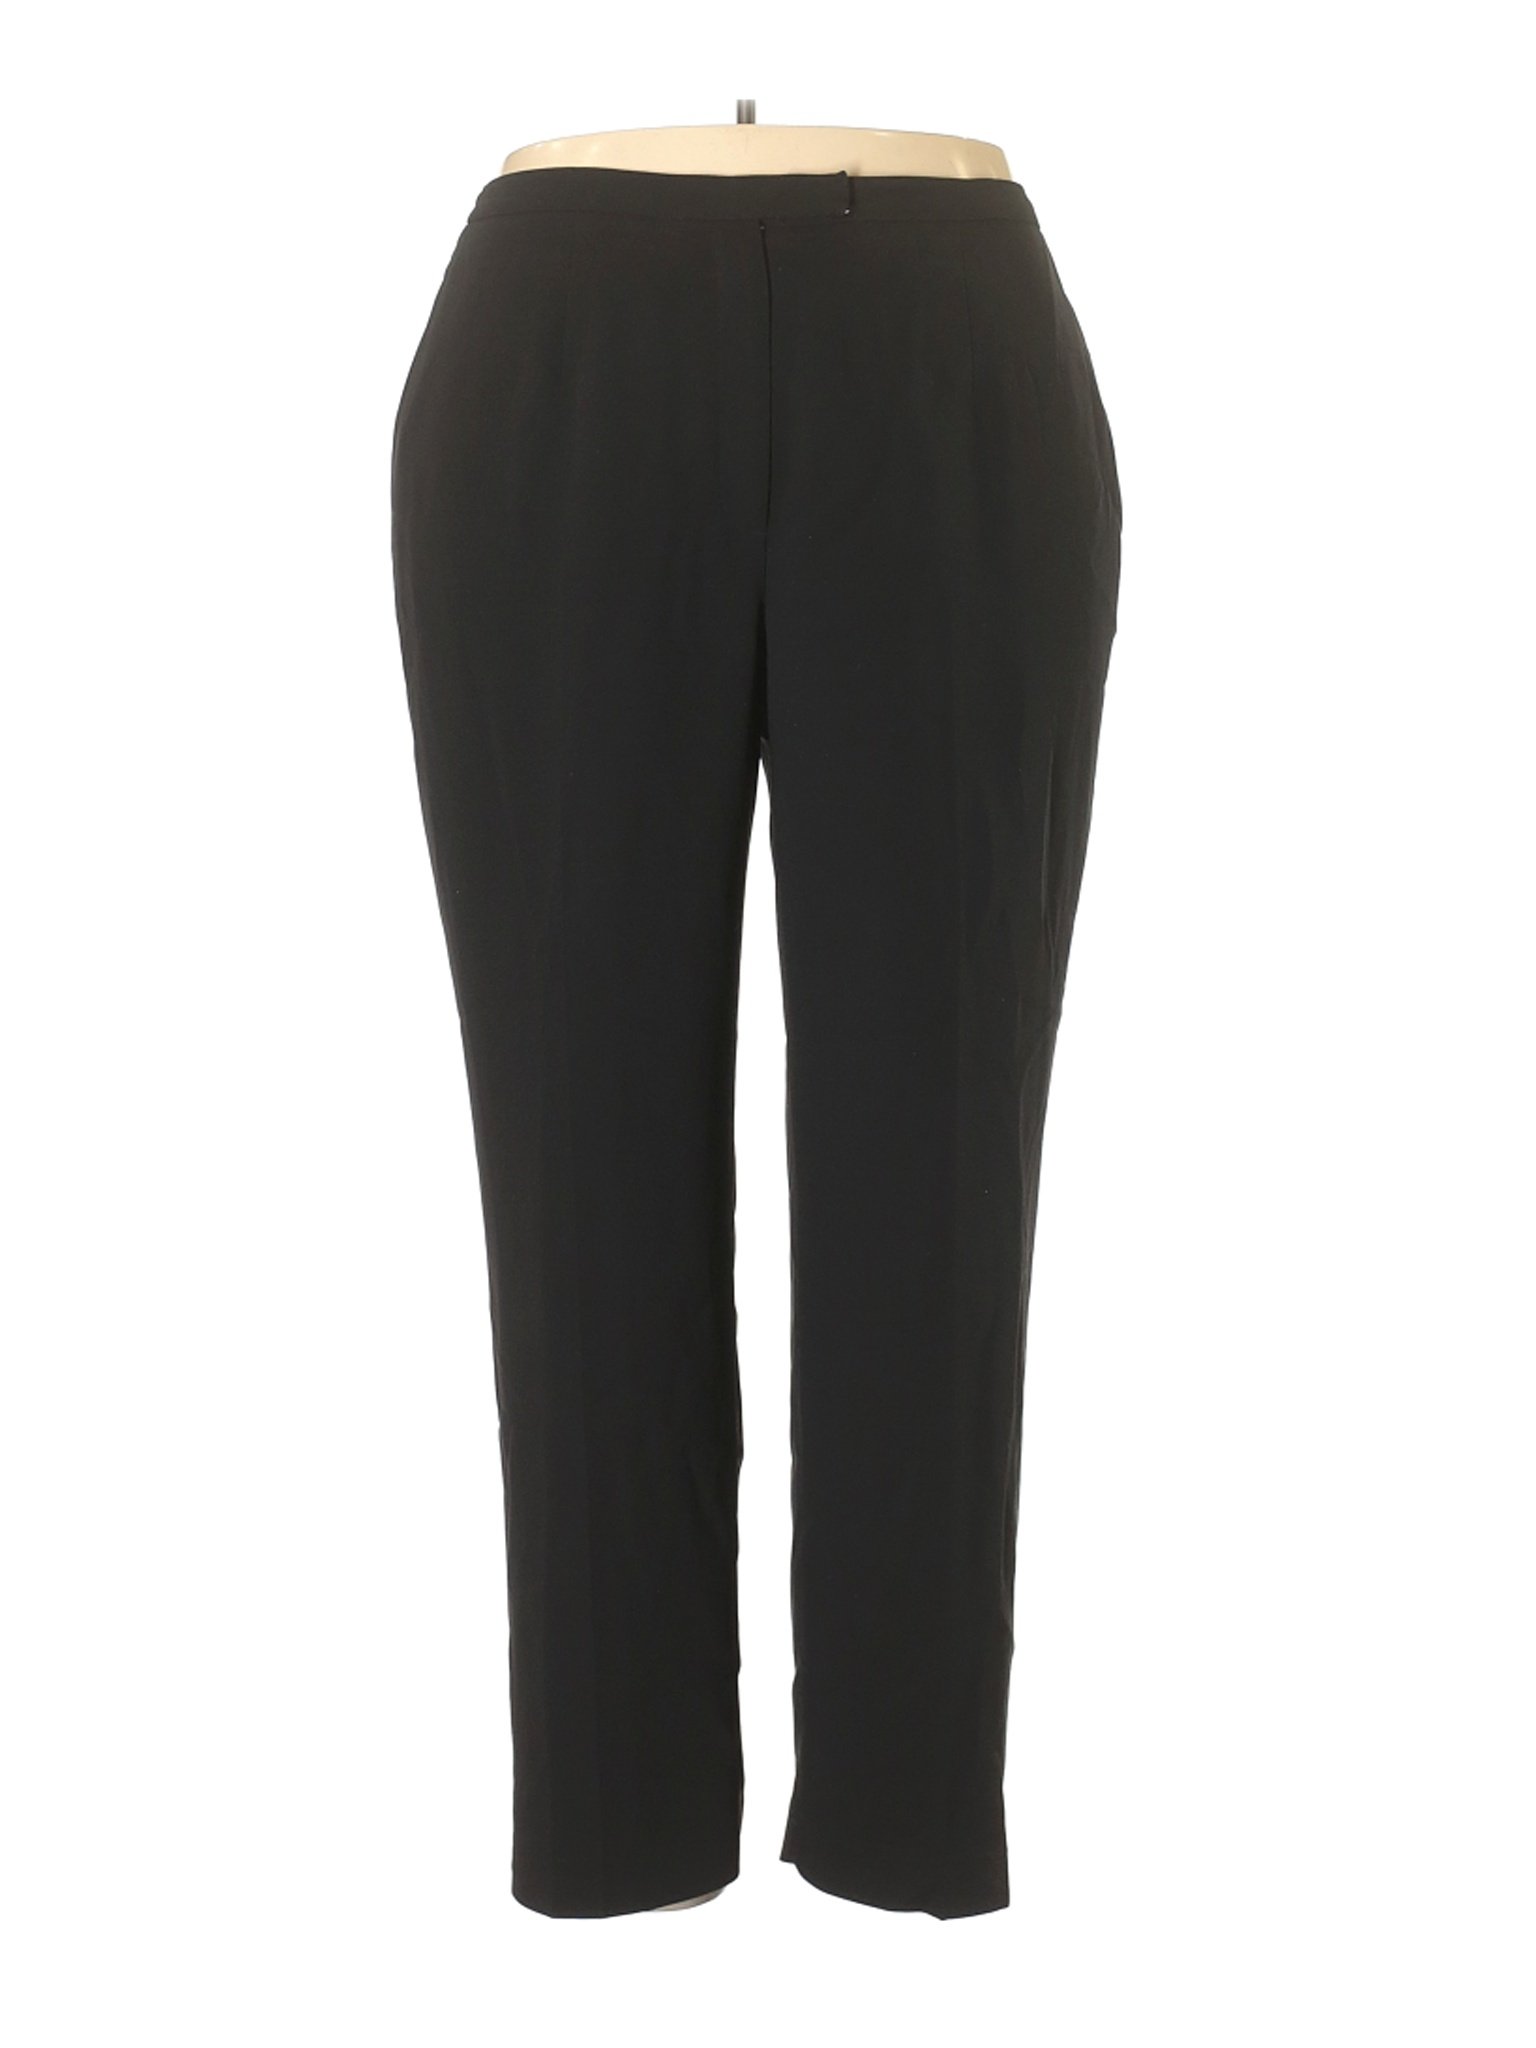 Jones Studio Women Black Dress Pants 18 Plus | eBay